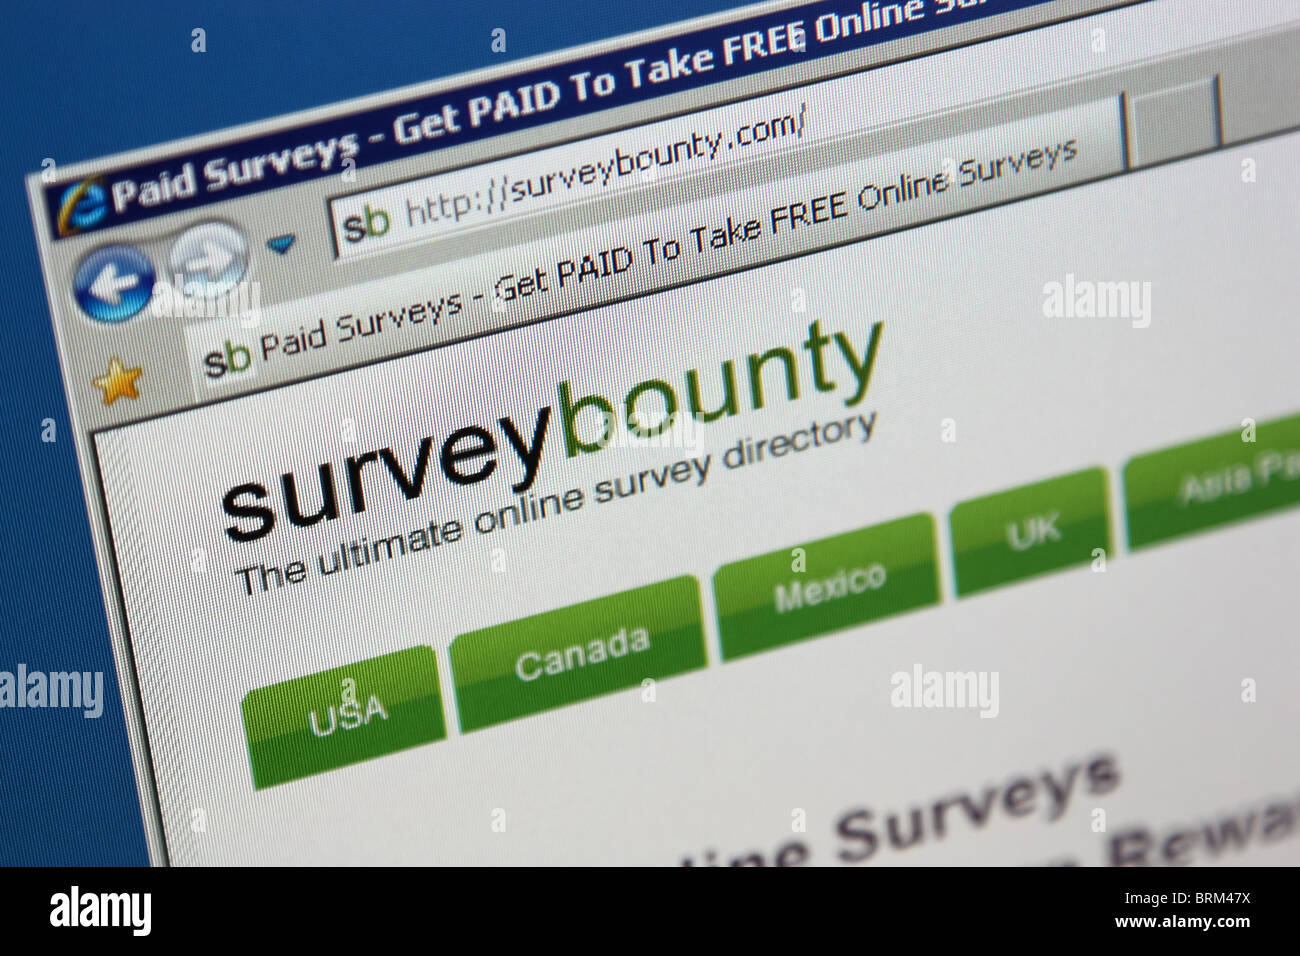 online survey surveybounty.com Stock Photo